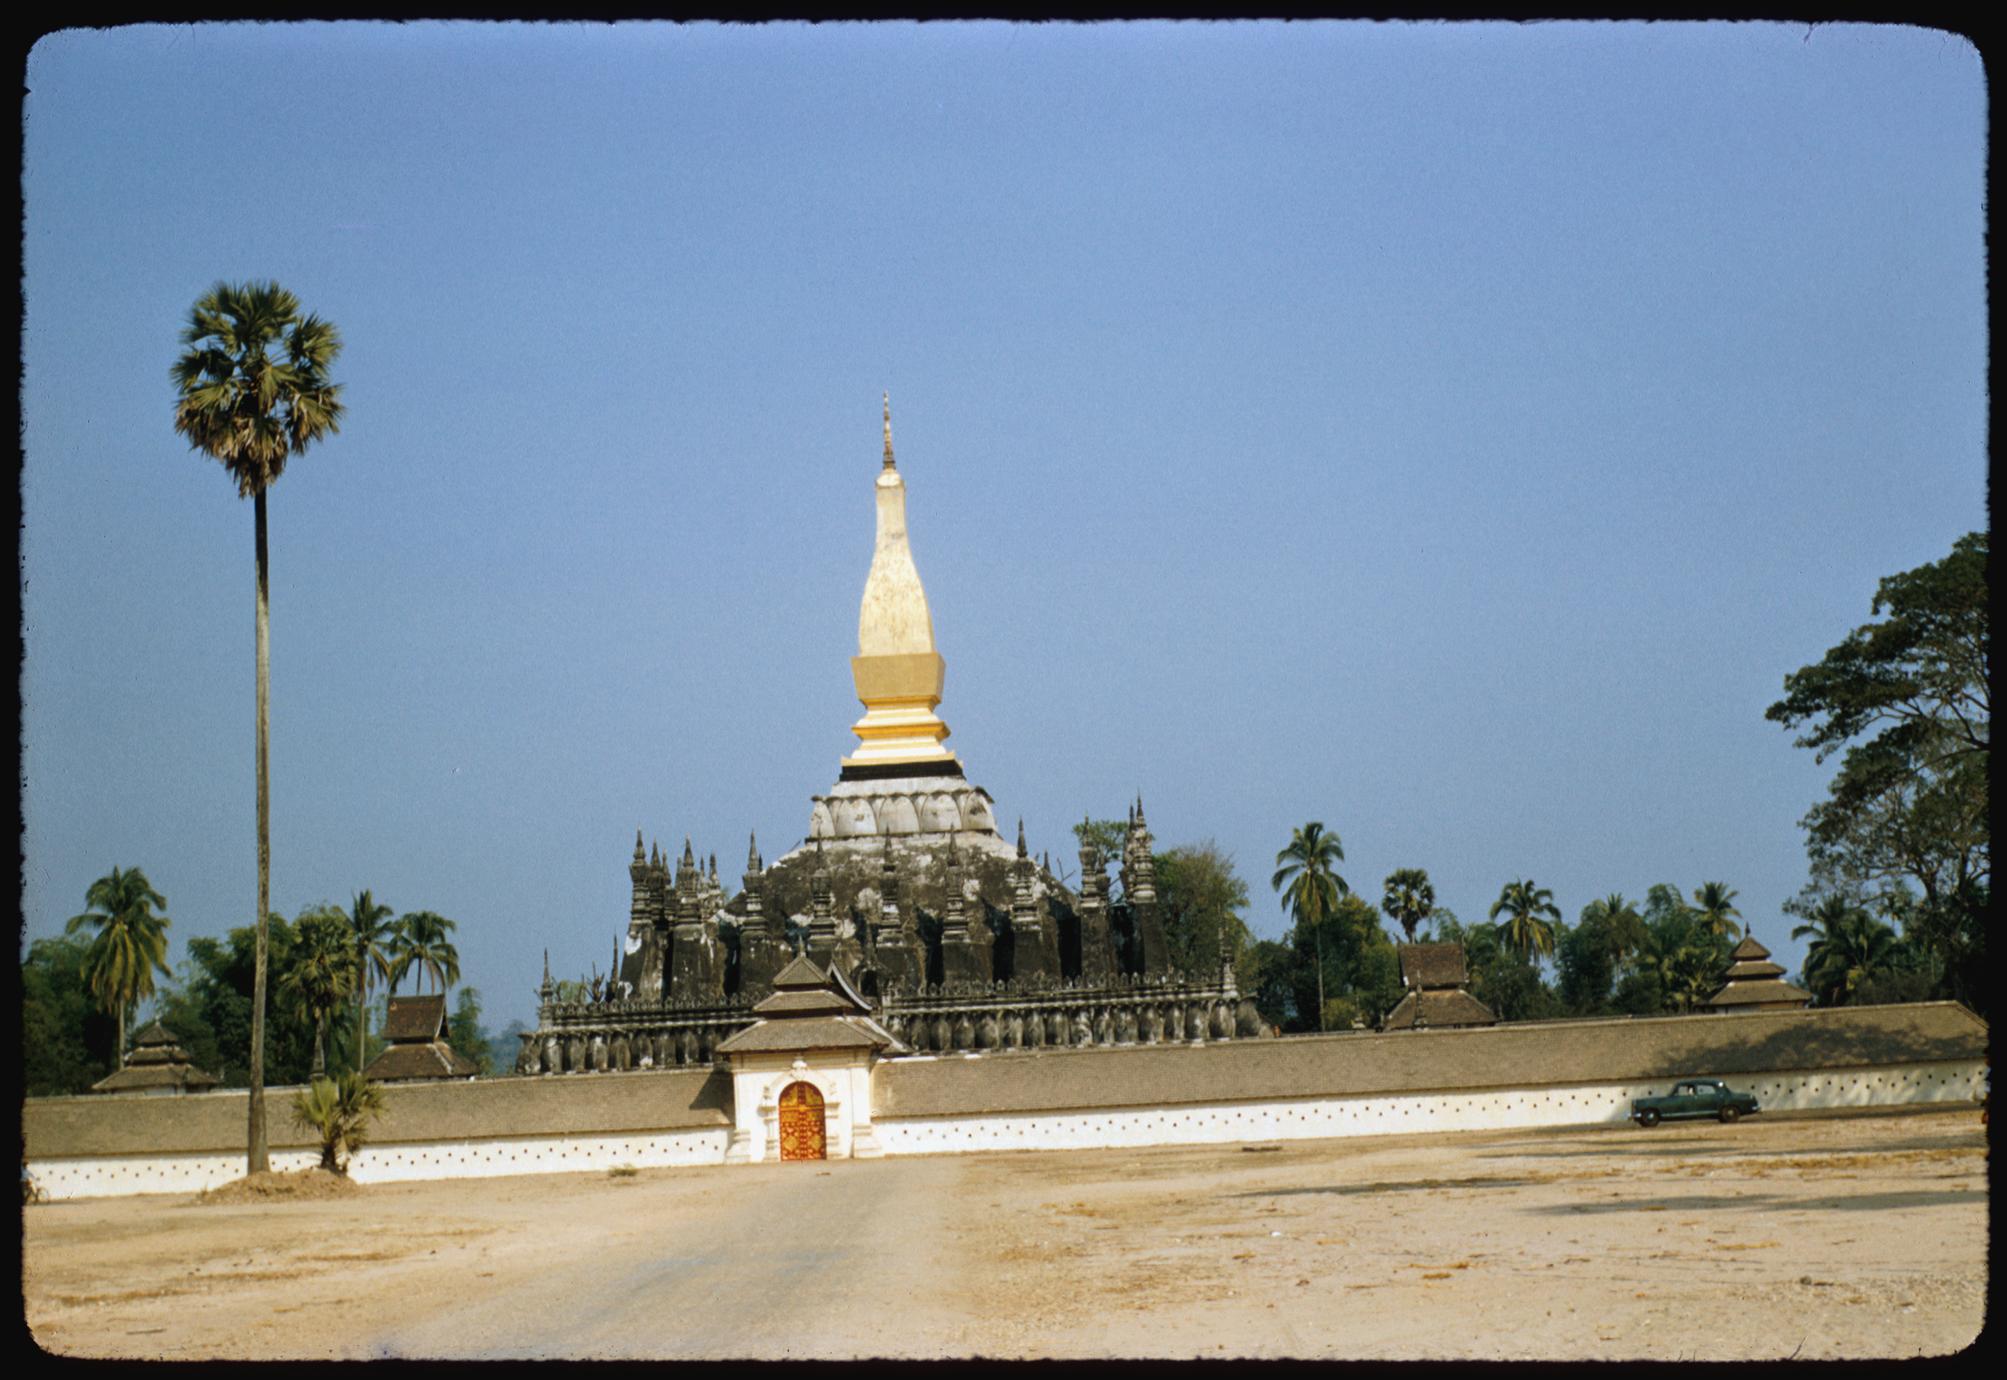 That Luang shrine